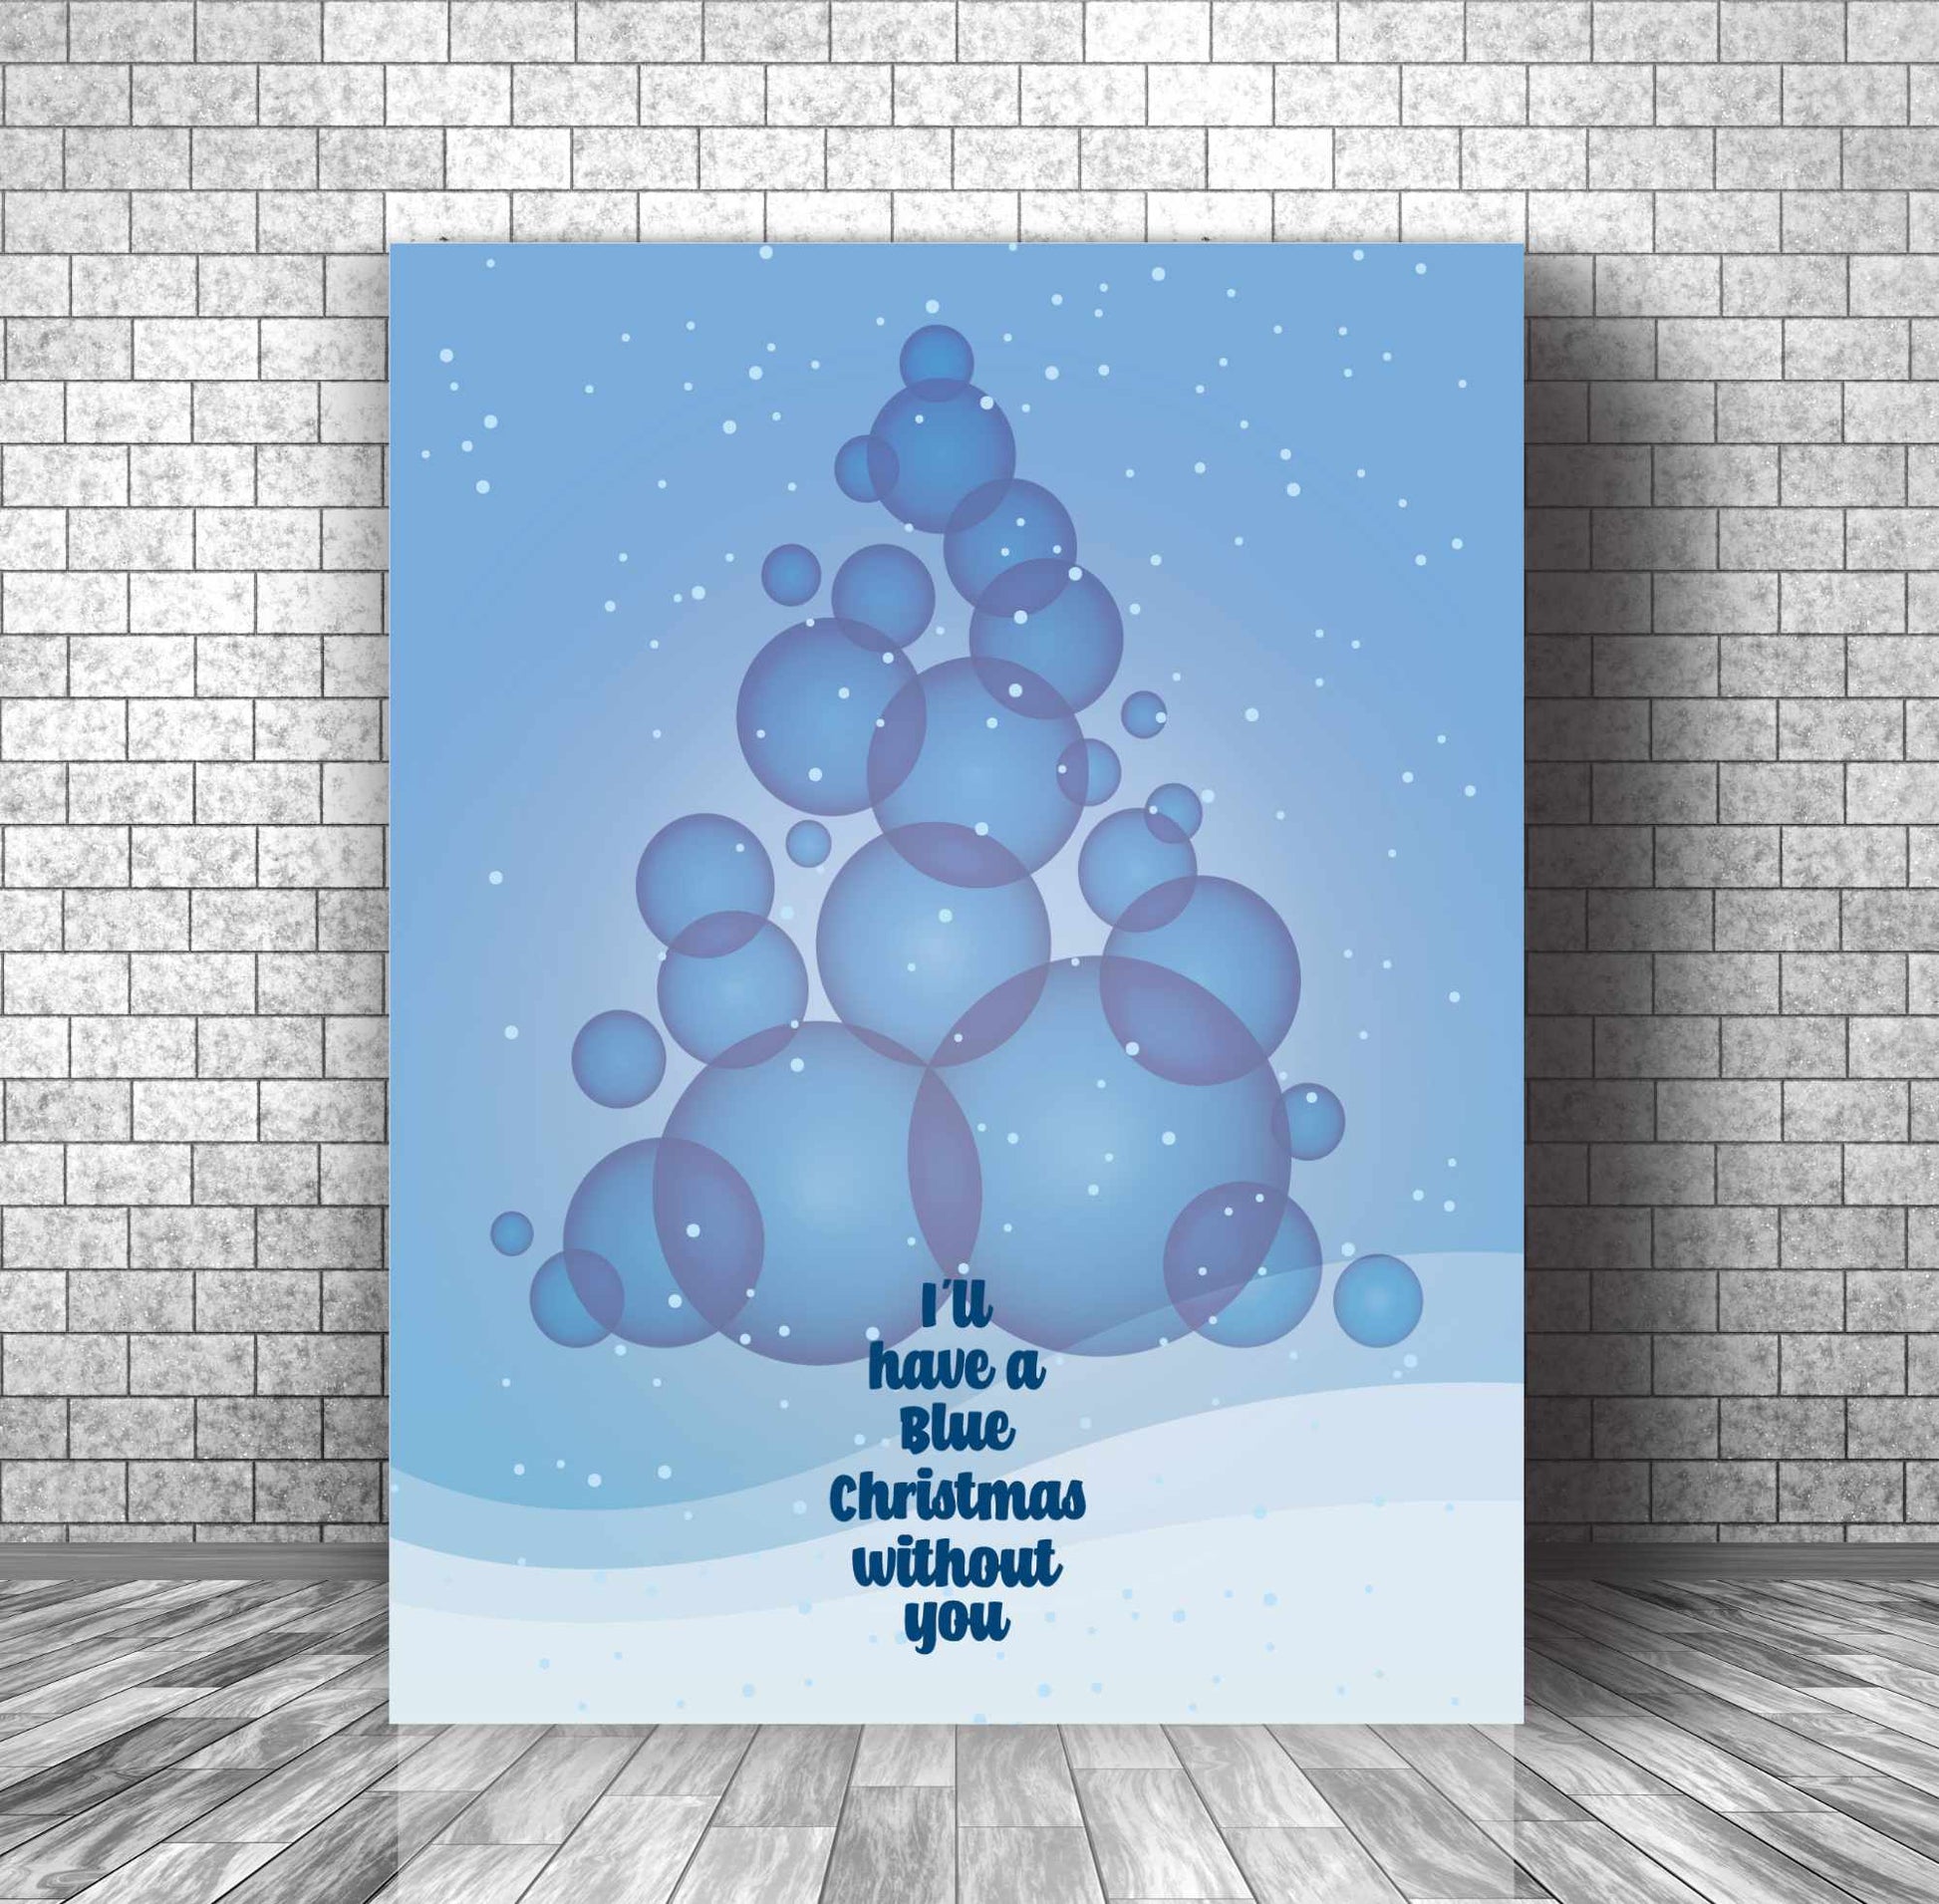 Blue Christmas by Elvis Presley - Lyric Inspired Art Print Song Lyrics Art Song Lyrics Art 11x14 Canvas Wrap 